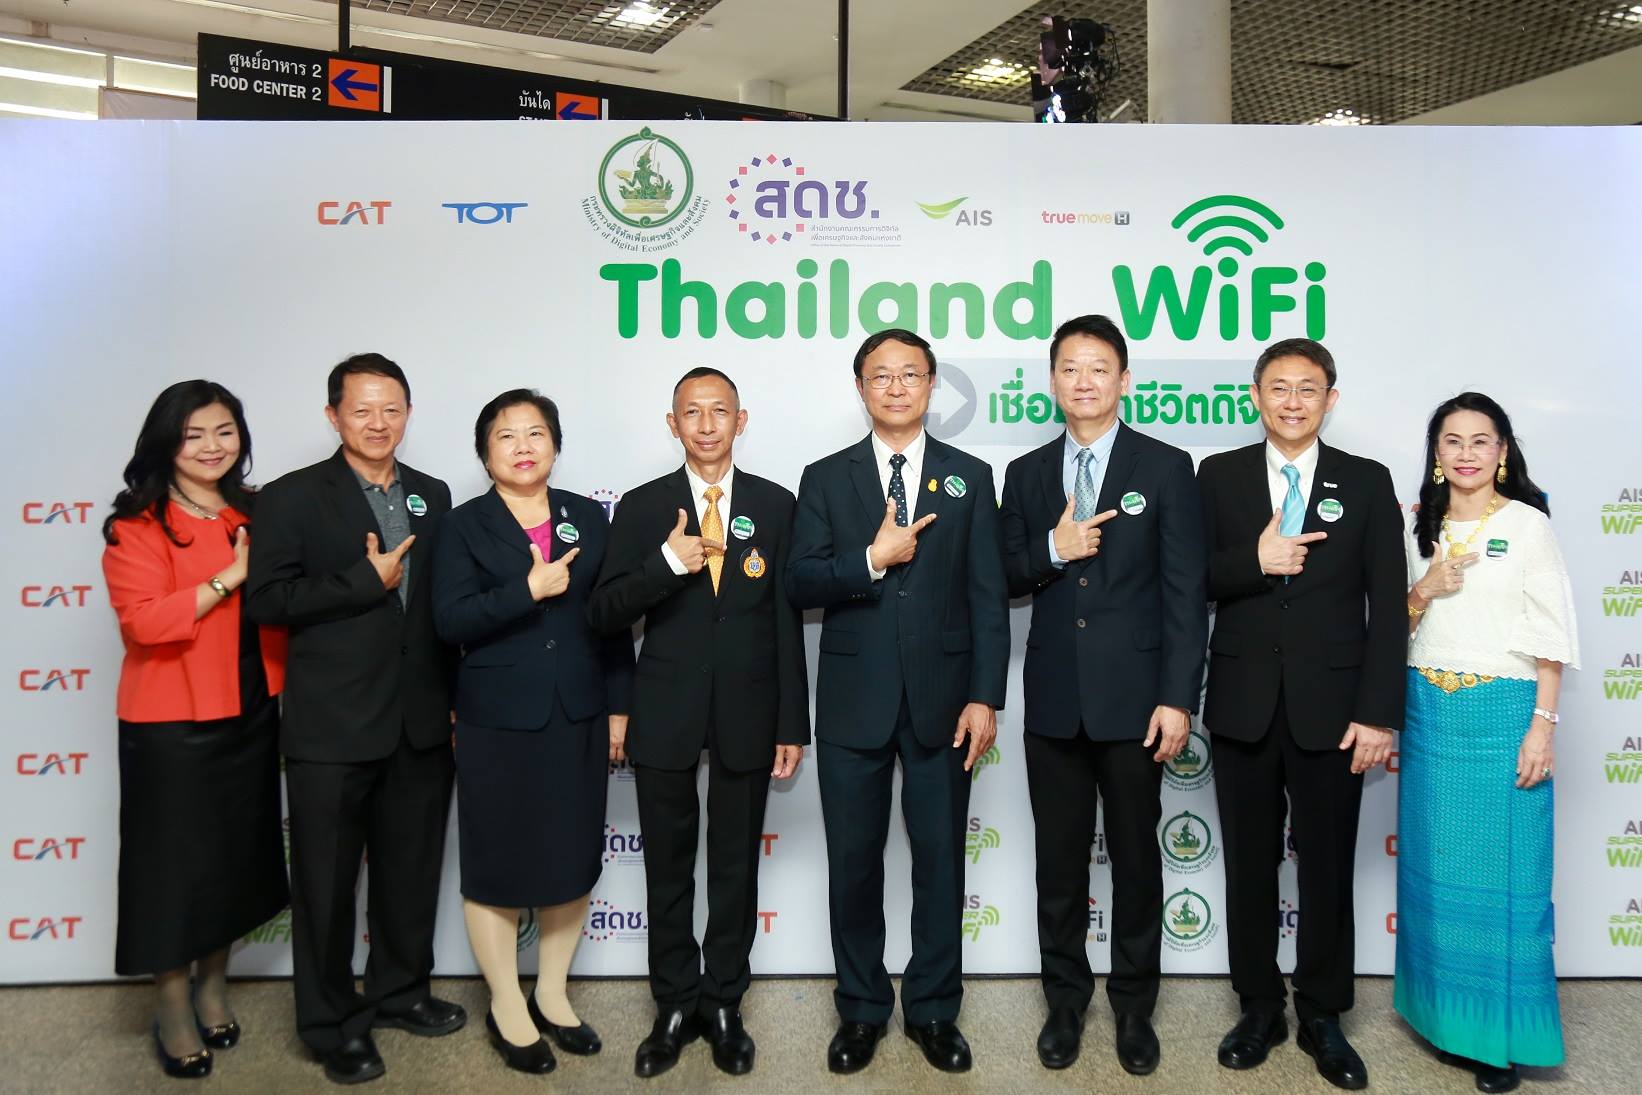 TH Wi-Fi ฟรี Wi-Fi ทั่วประเทศใหม่ล่าสุด ลงทะเบียนครั้งเดียว ใช้ได้ทุกเครือข่าย